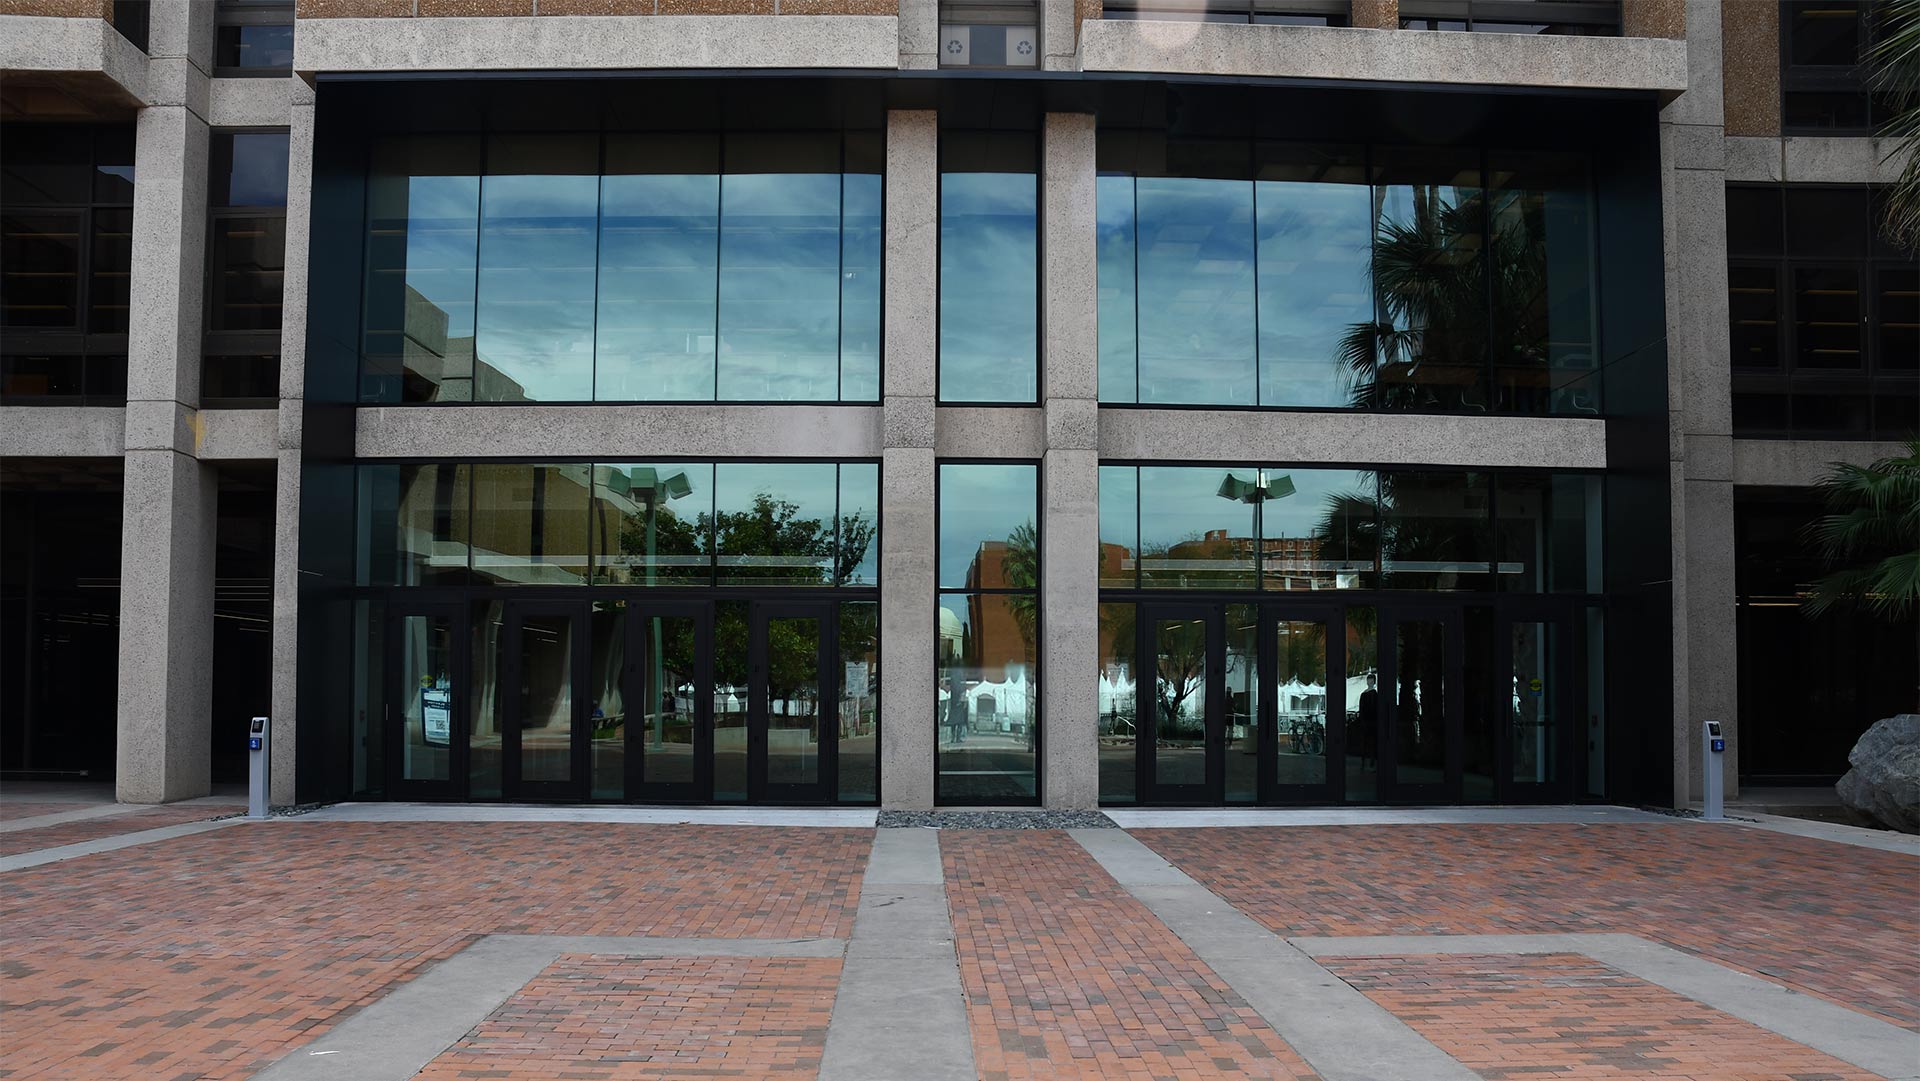 New north side entrance at the University of Arizona main library.